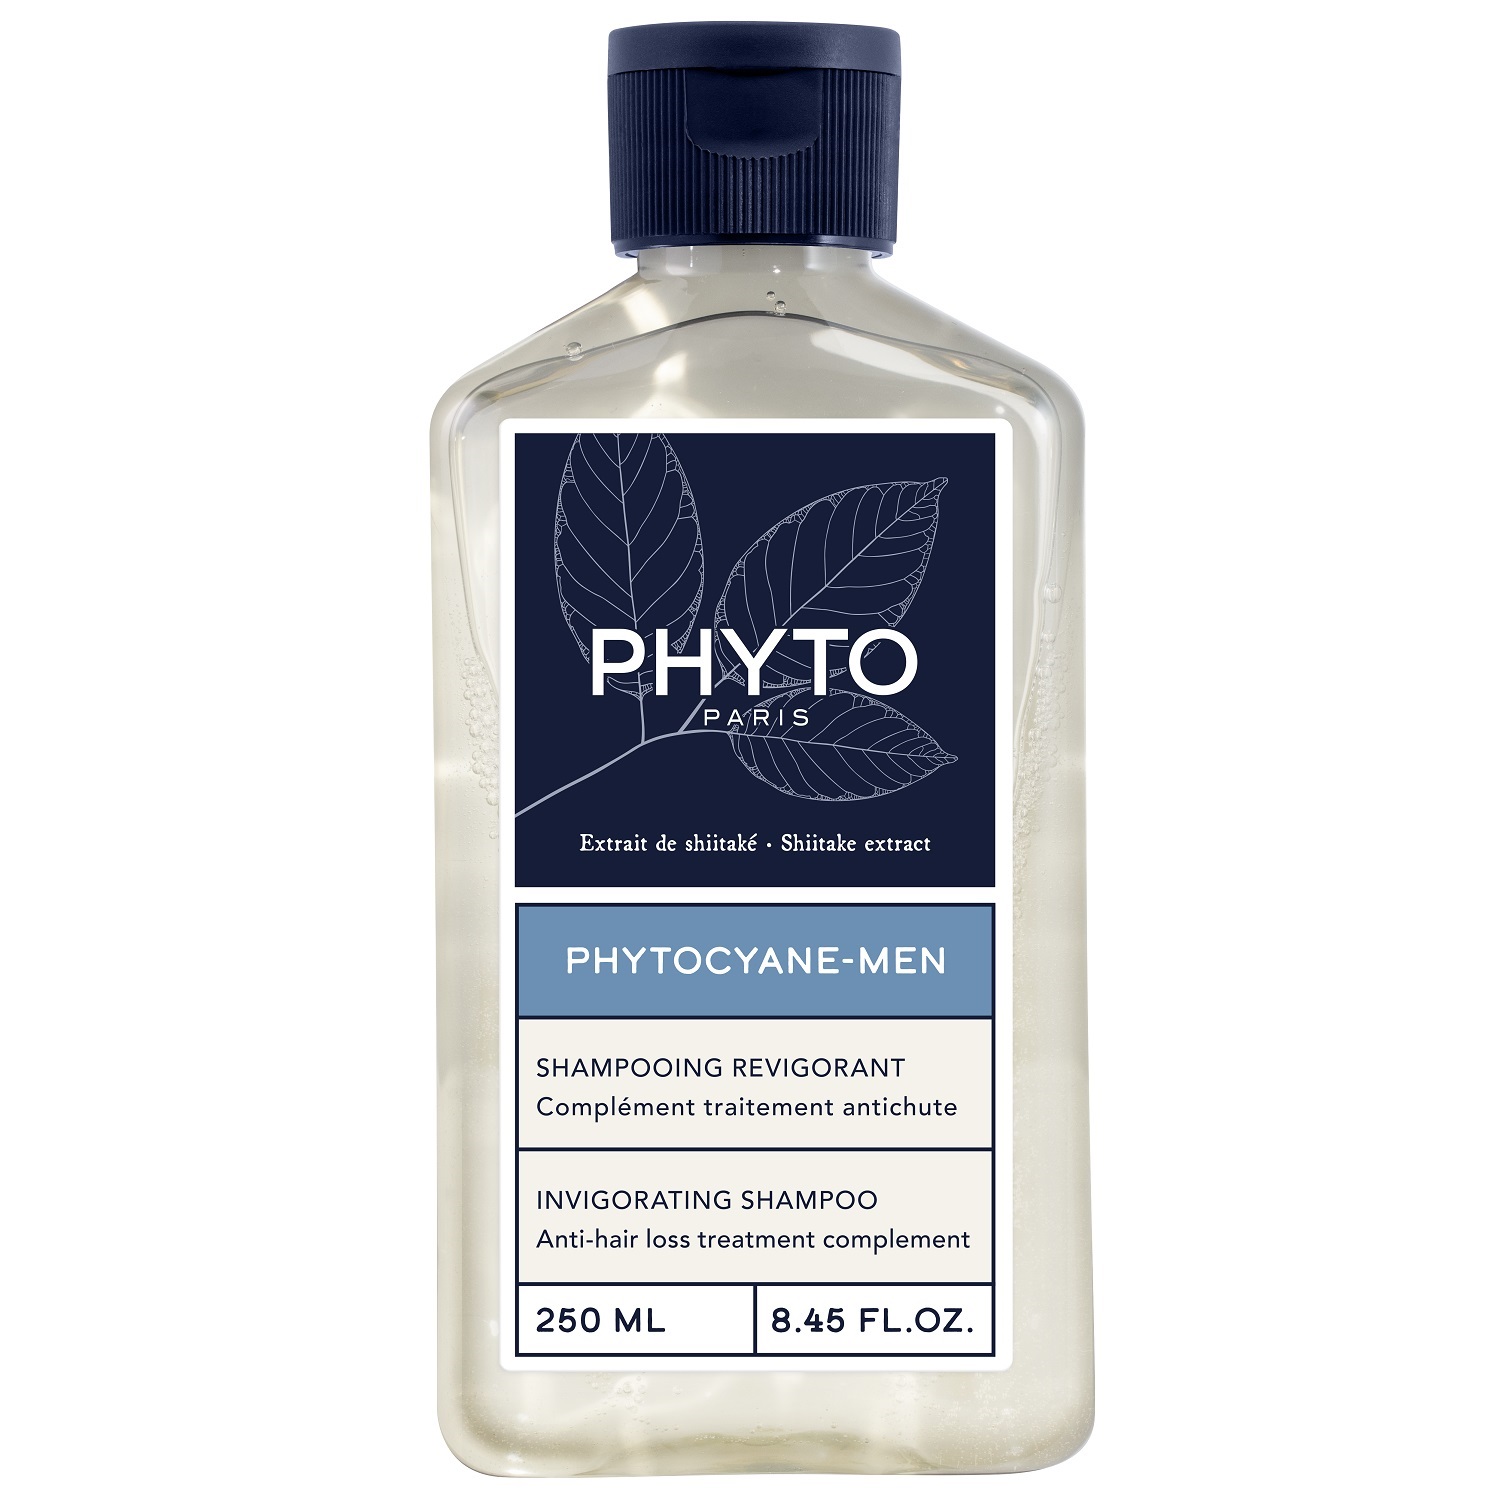 Phyto Мужской укрепляющий шампунь для волос, 250 мл (Phyto, Phytocyane) phytosolba phytocyane шампунь укрепляющий 250 мл